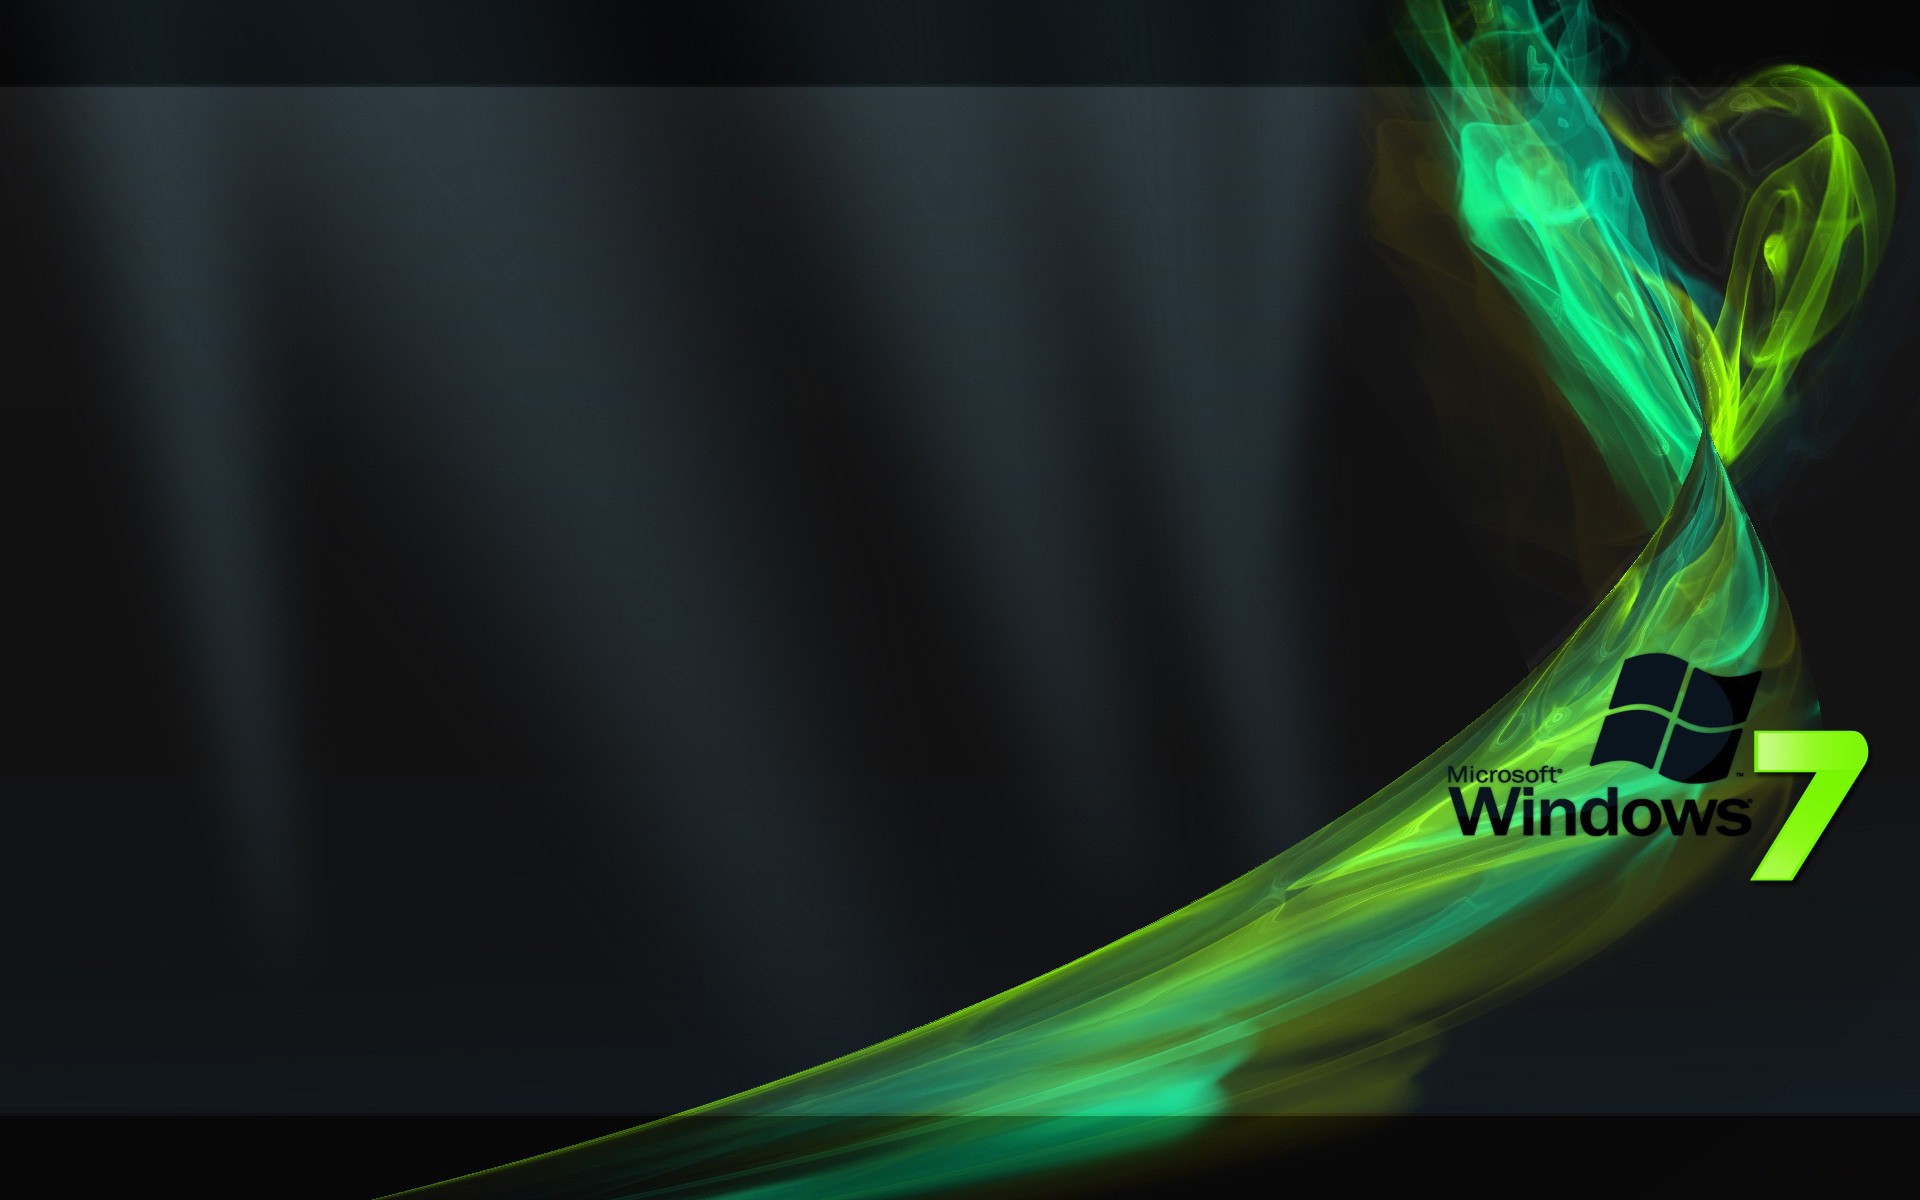 Windows 7 Wallpaper Desktop - Uncalke.com